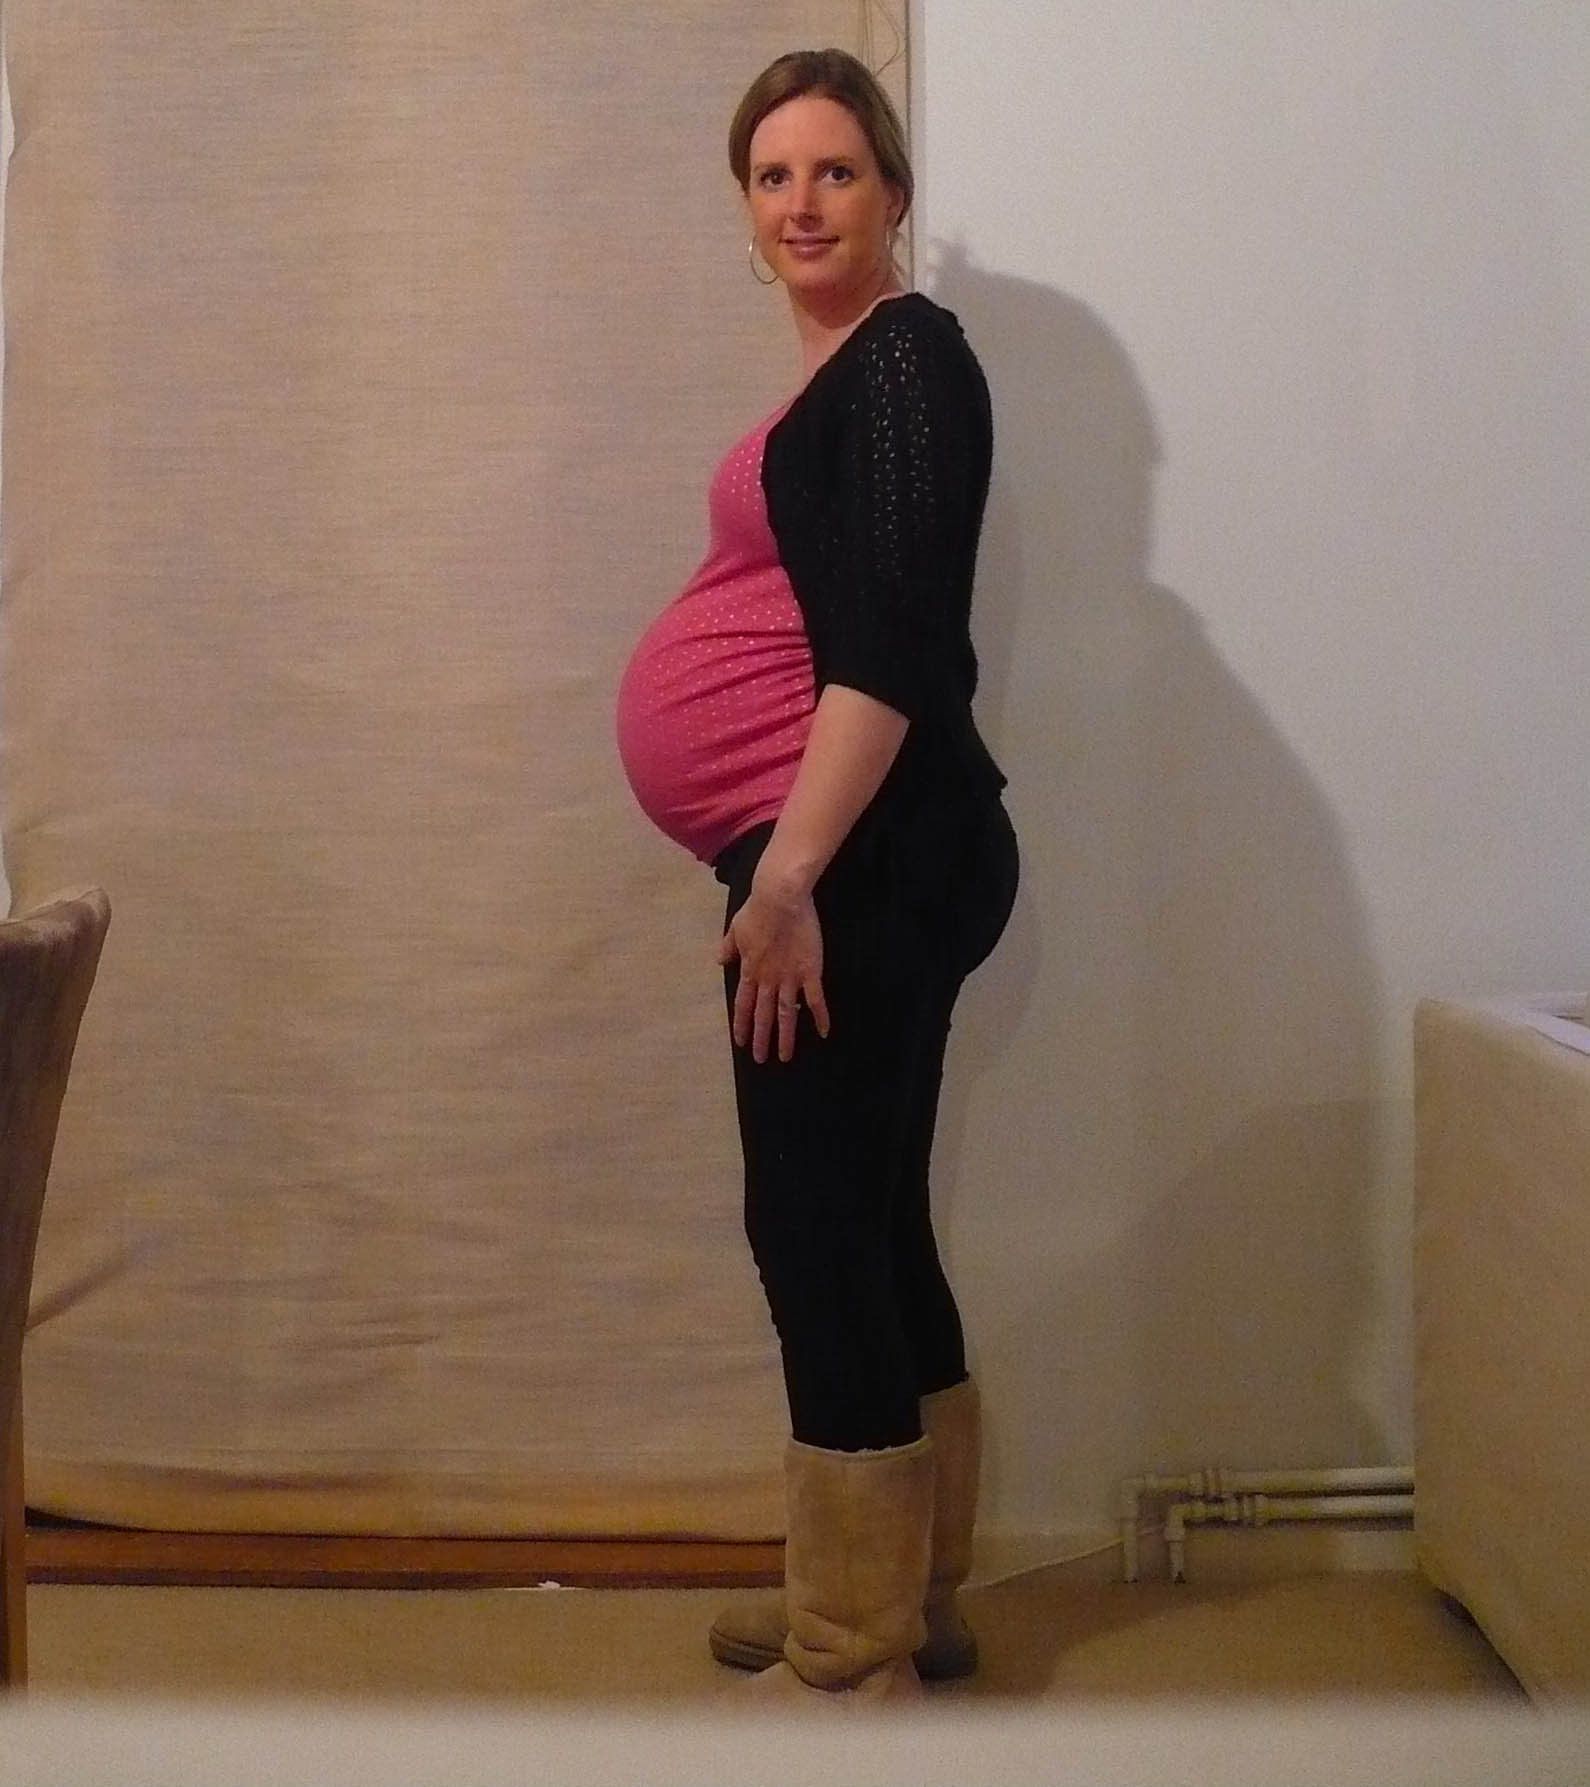 Seven Month Pregnant 47